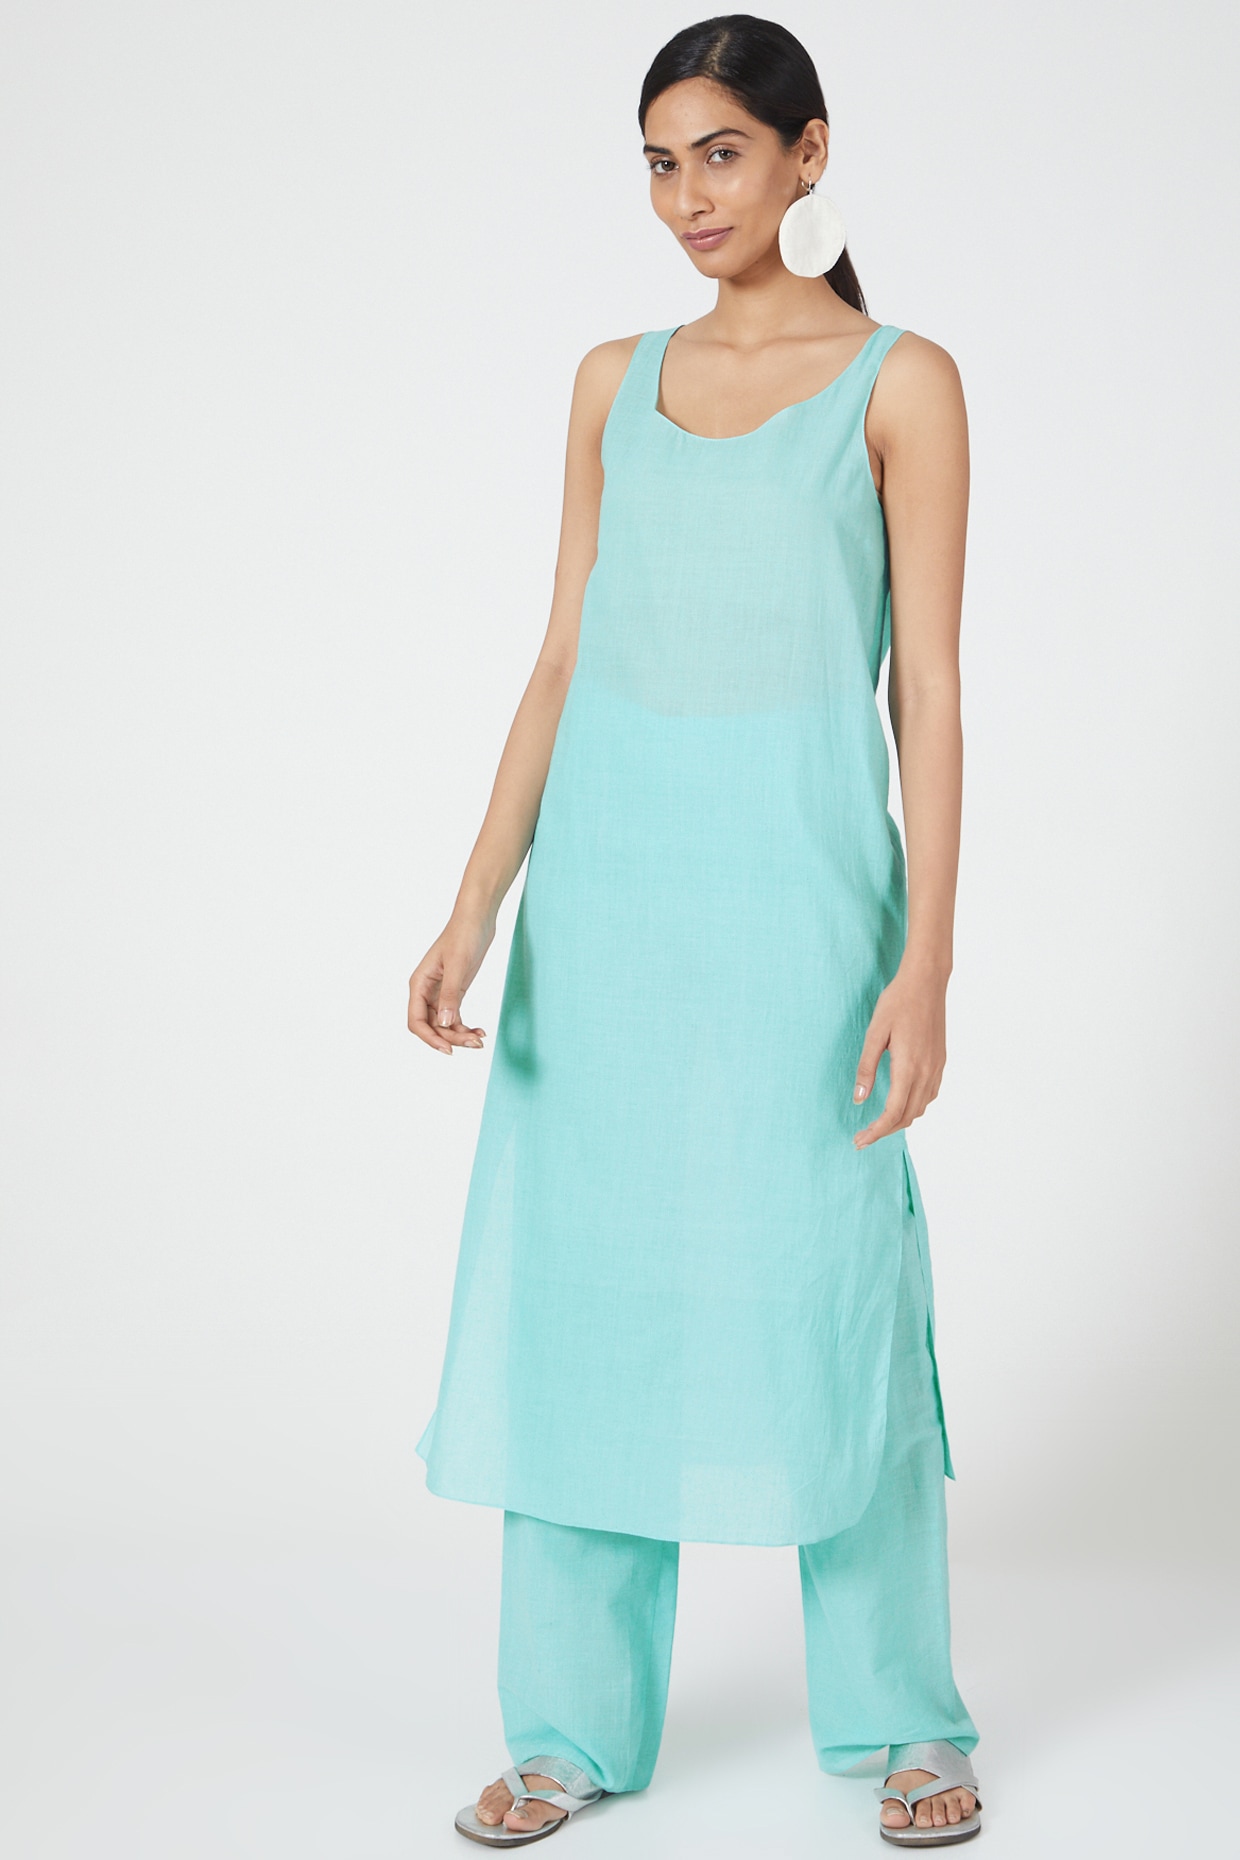 Checkered straight-cut Dress (Charcoal/ Blue) - ShopperBoard